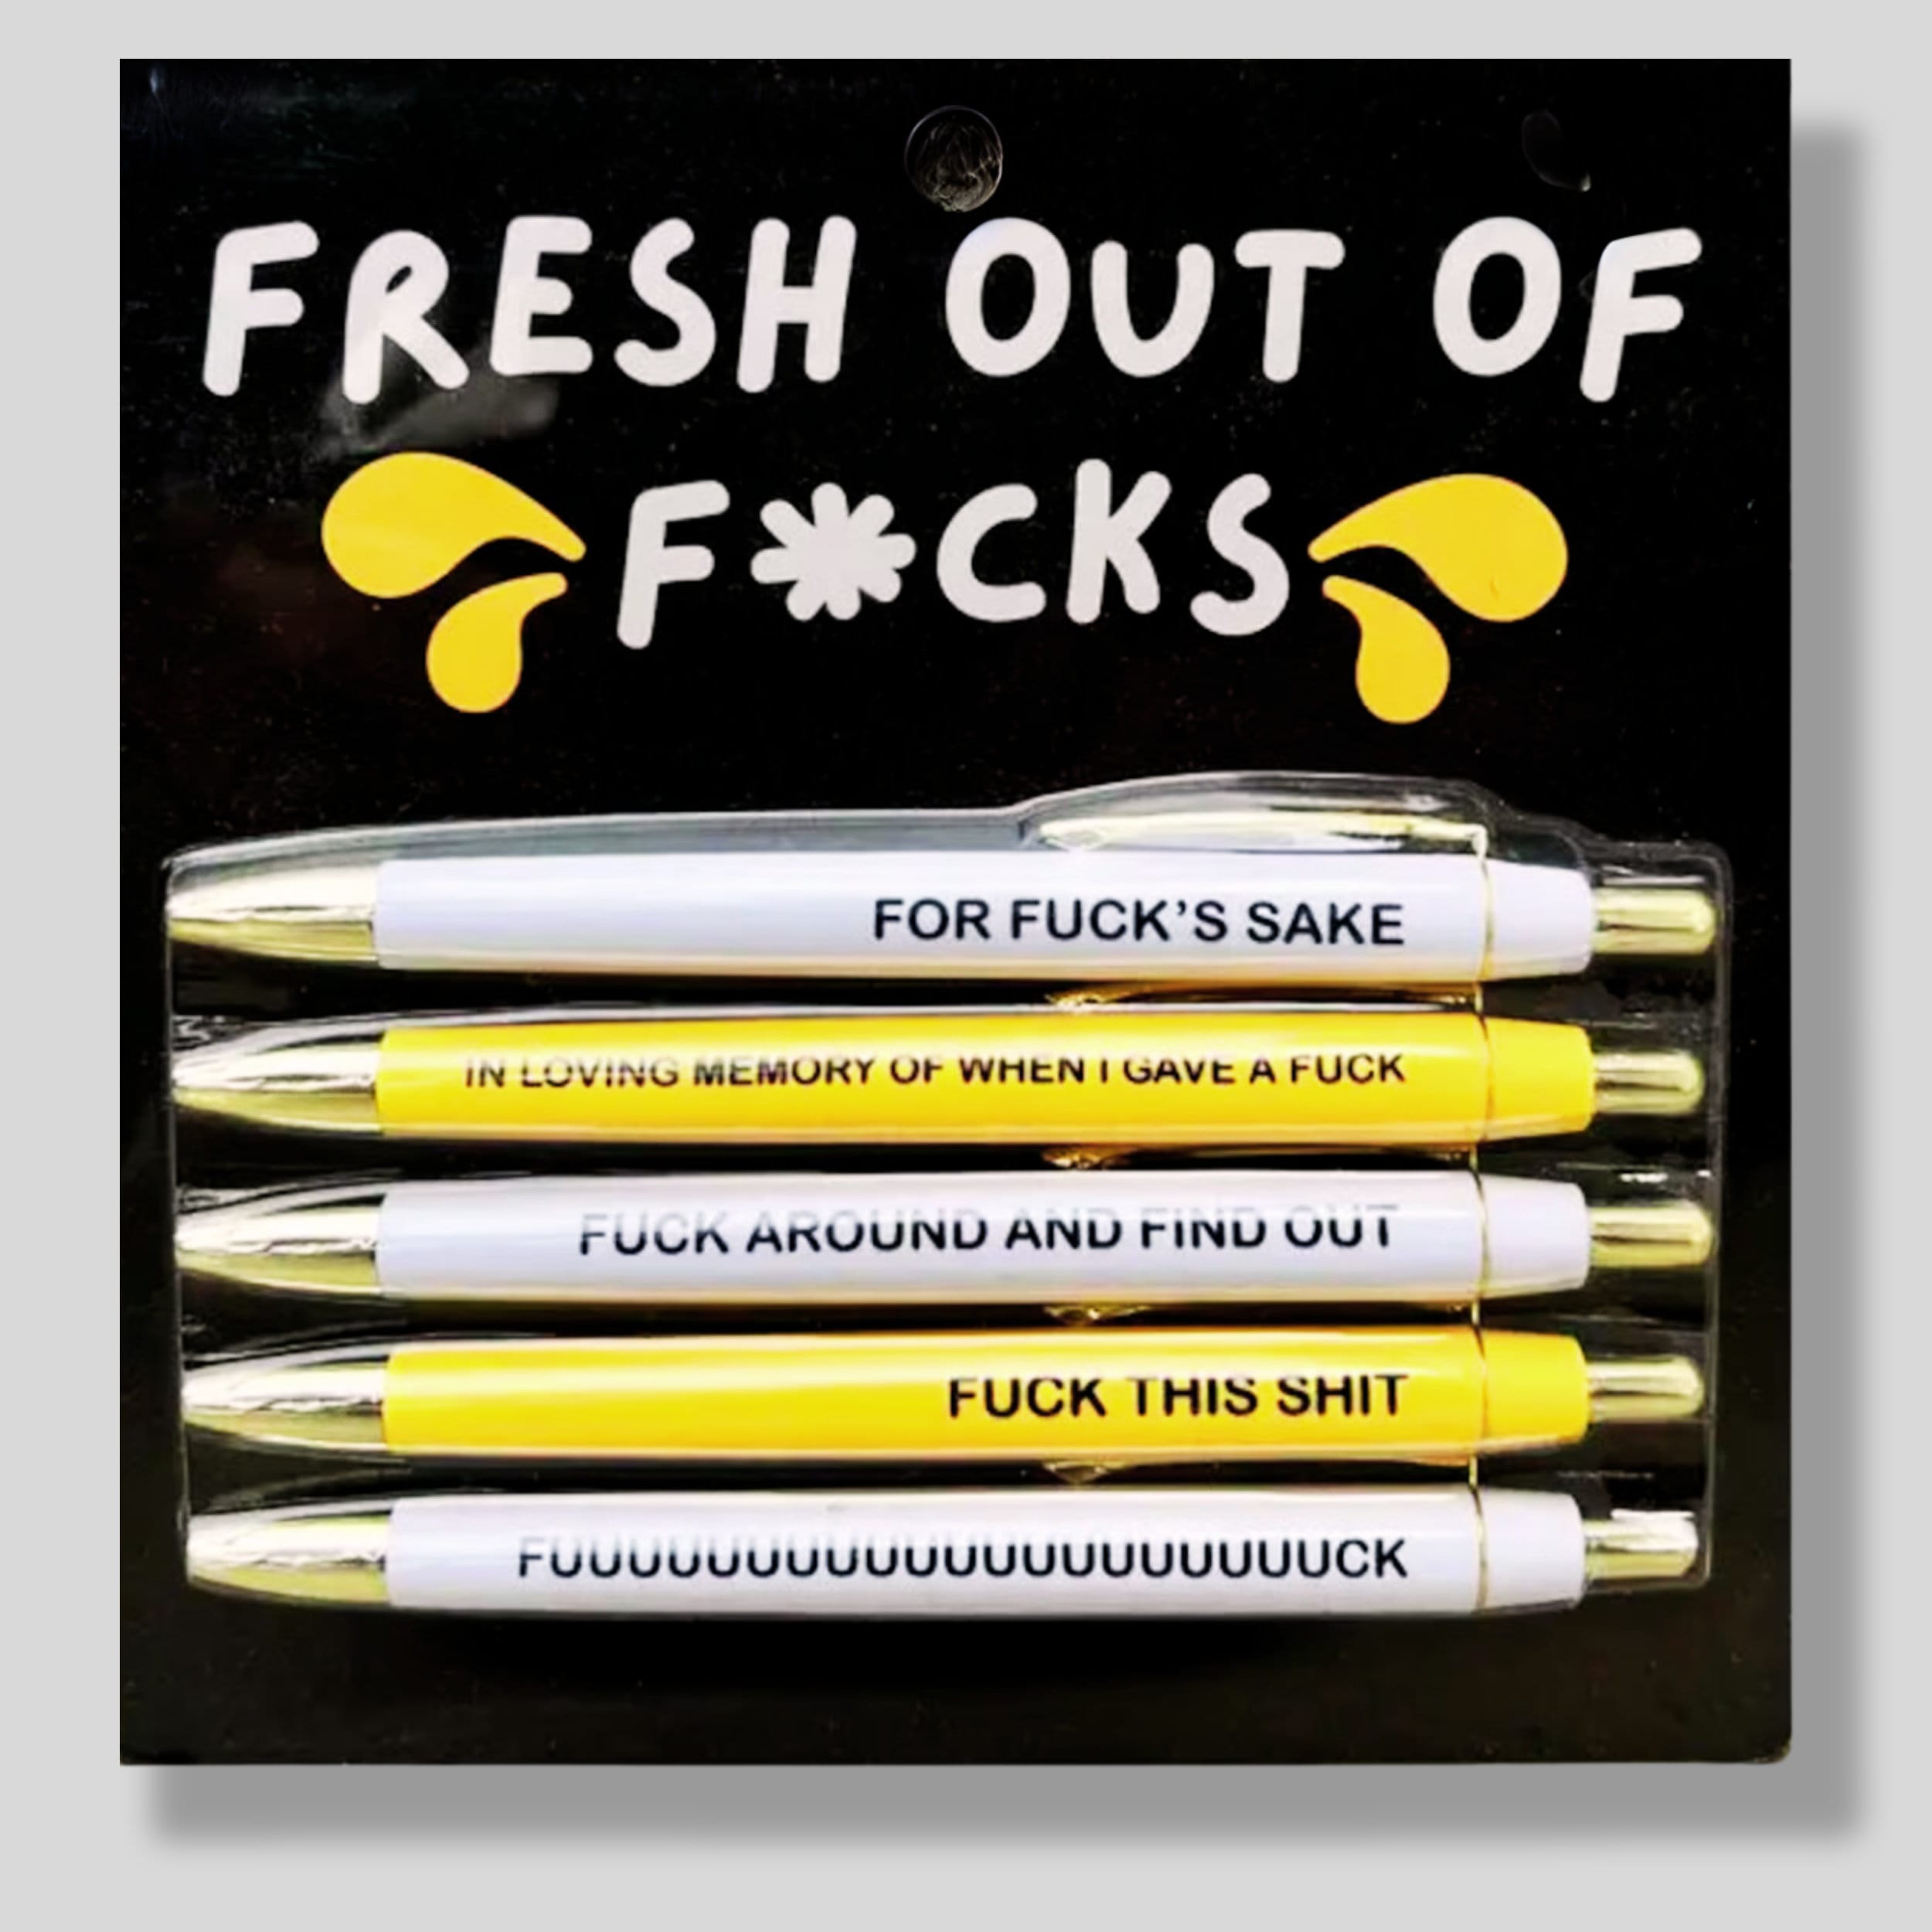 HLPHA 11PCS Funny Pens Set, Spoof Fun Ballpoint Pen Set, Premium novelty  pens Swear Word Daily Pen Set, offensive pens Funny DIY Office Gifts